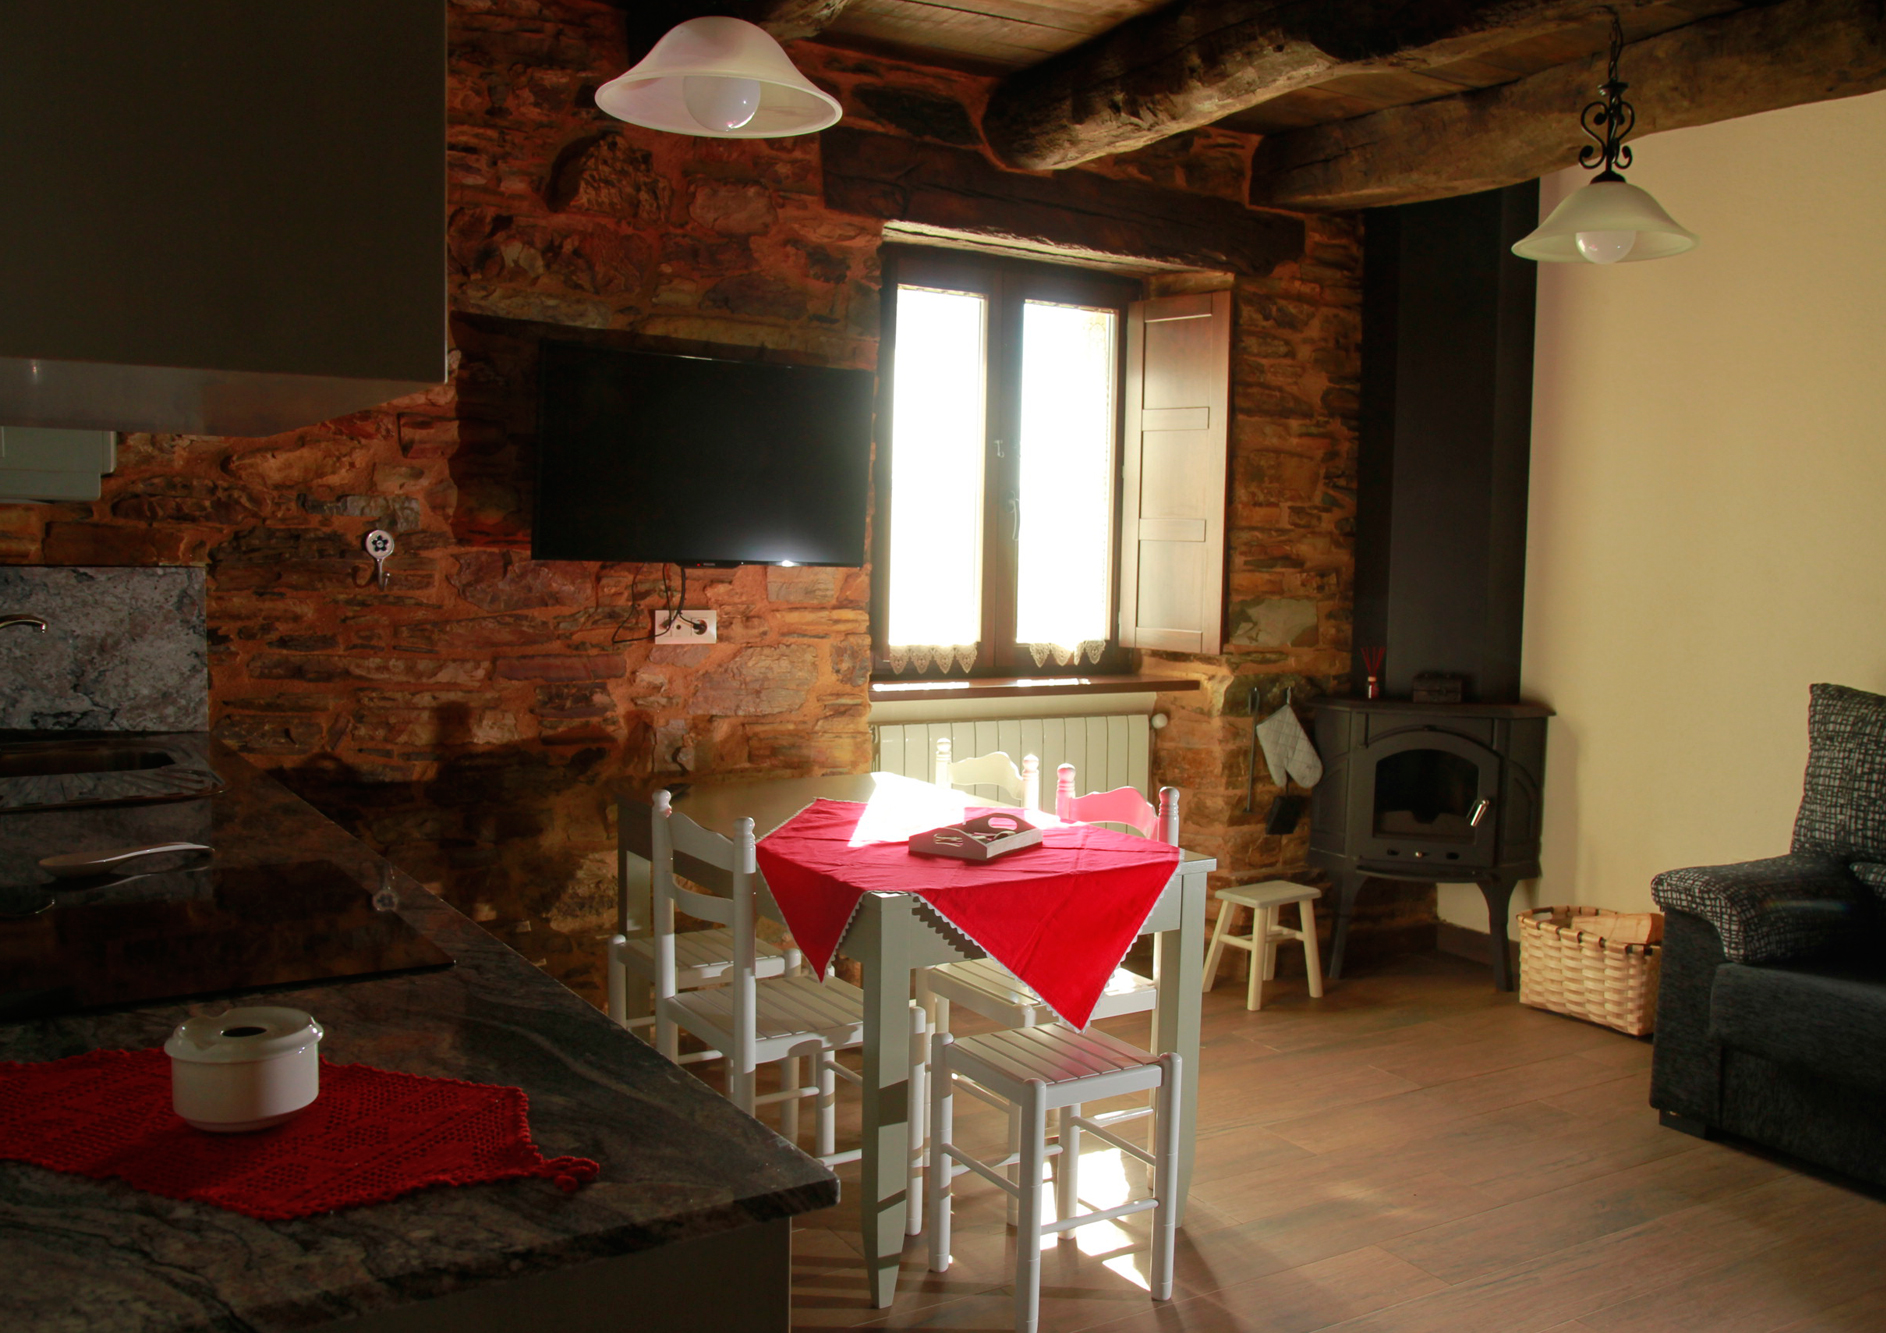 Salón cocina con chimenea del Apartamento Concepción Arenal